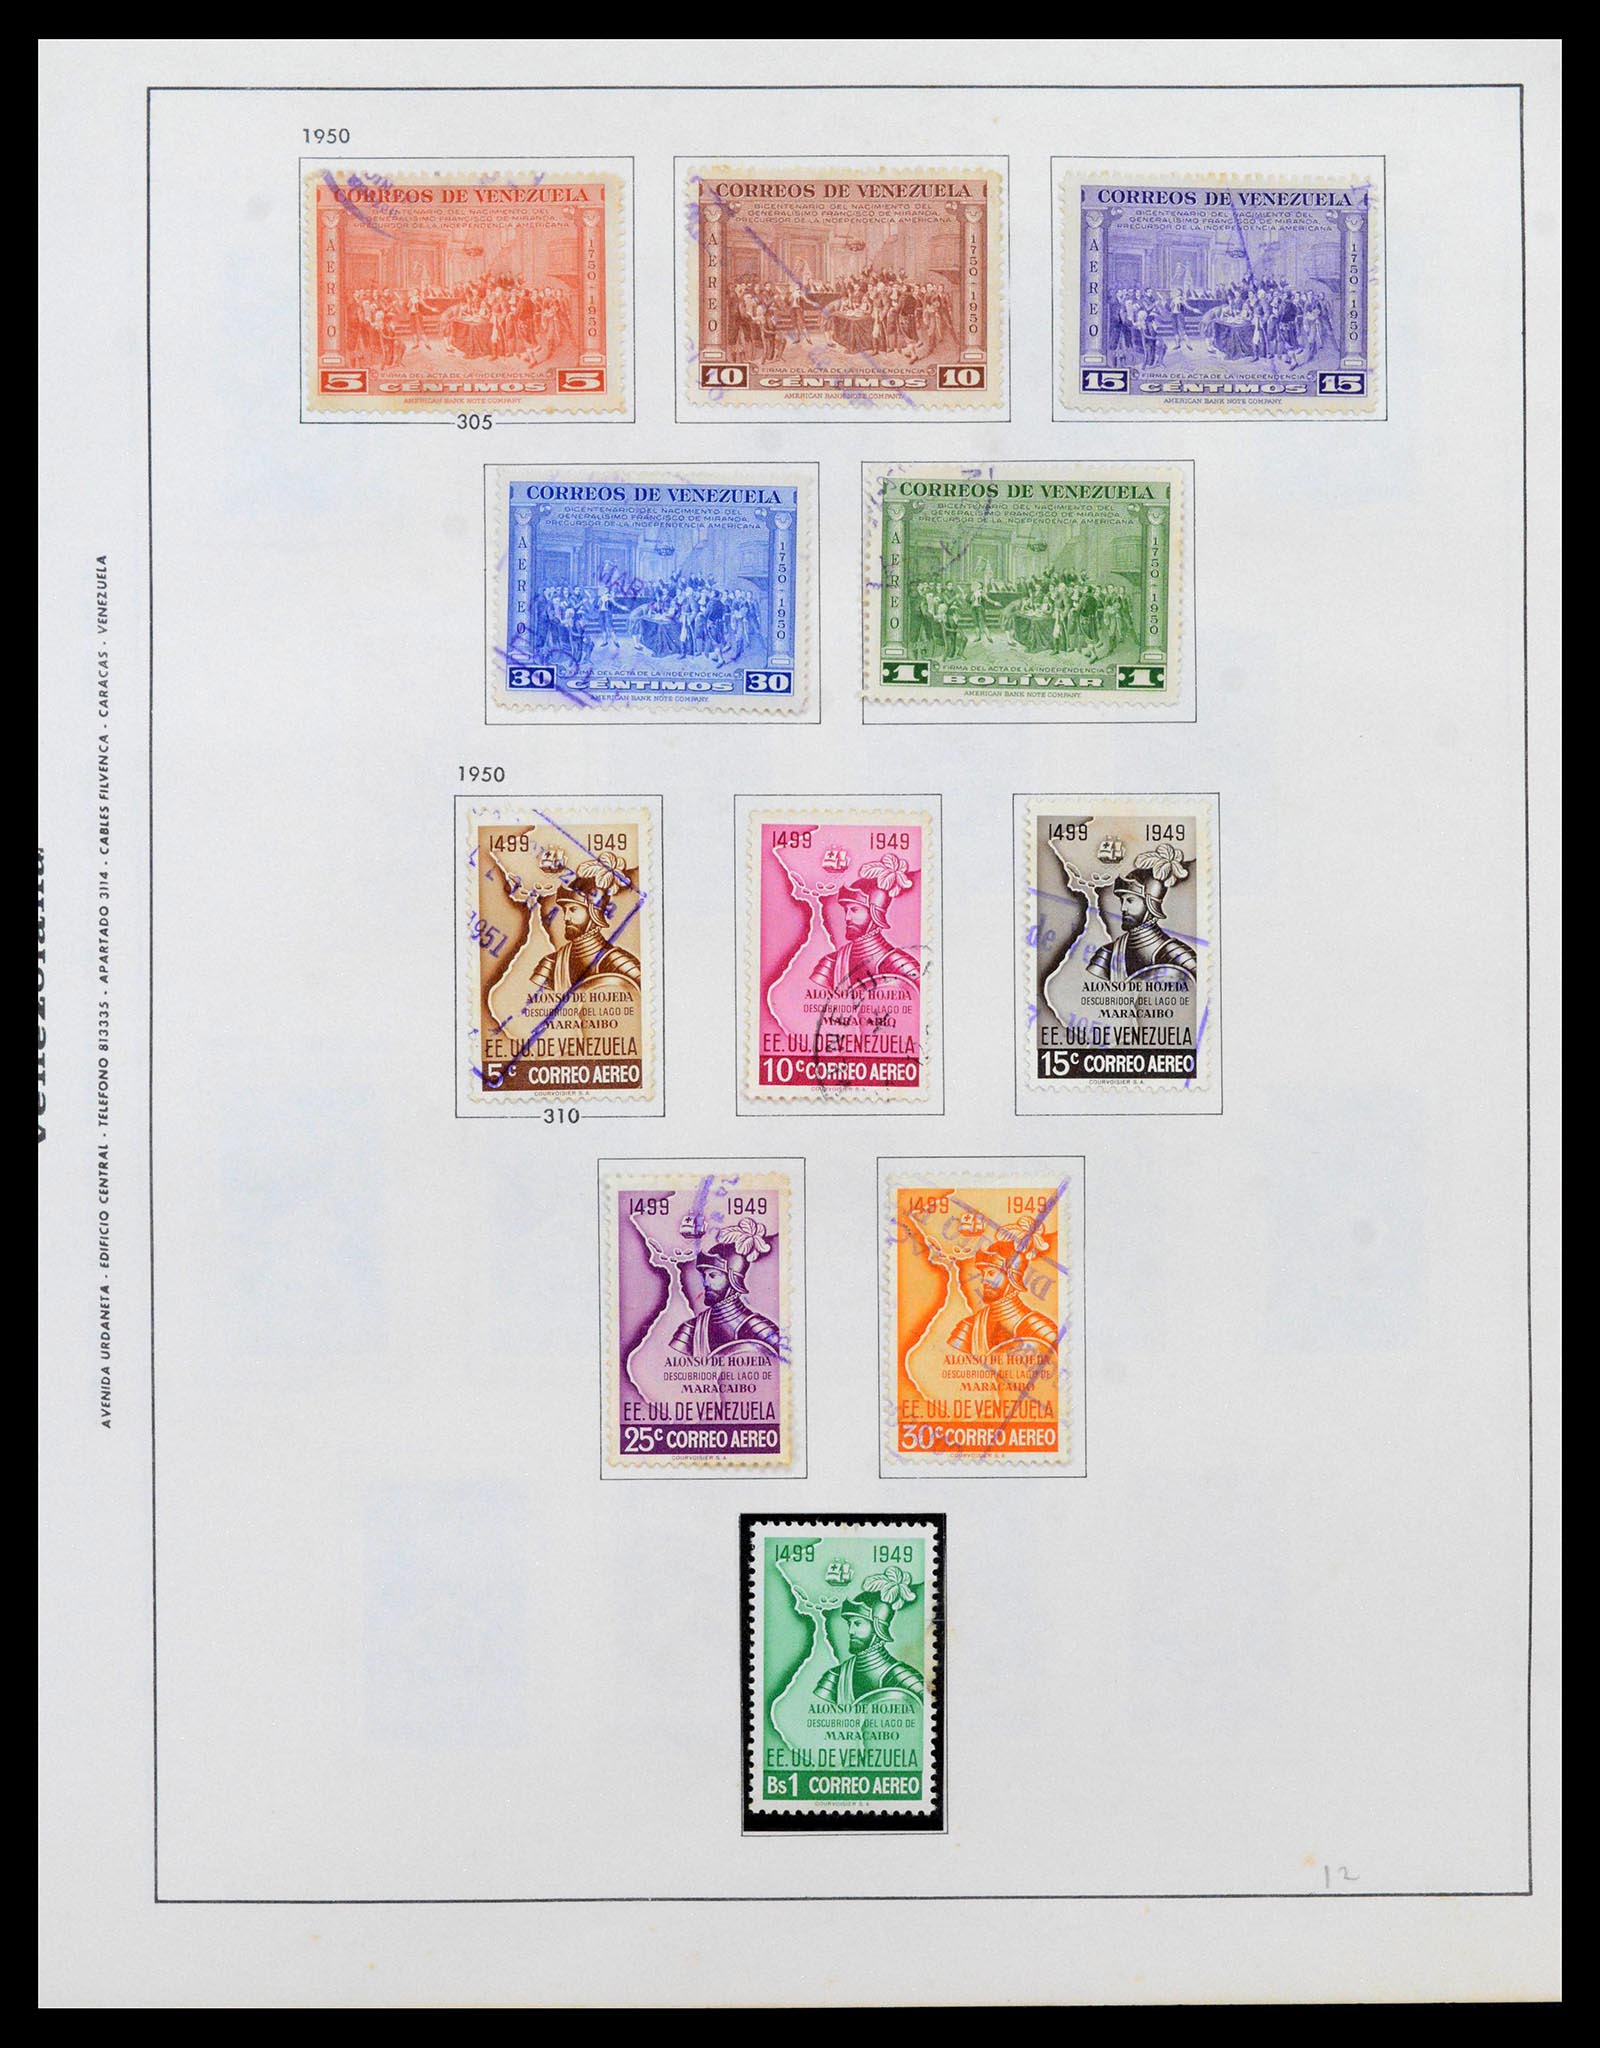 39436 0020 - Stamp collection 39436 Venezuela 1859-1985.